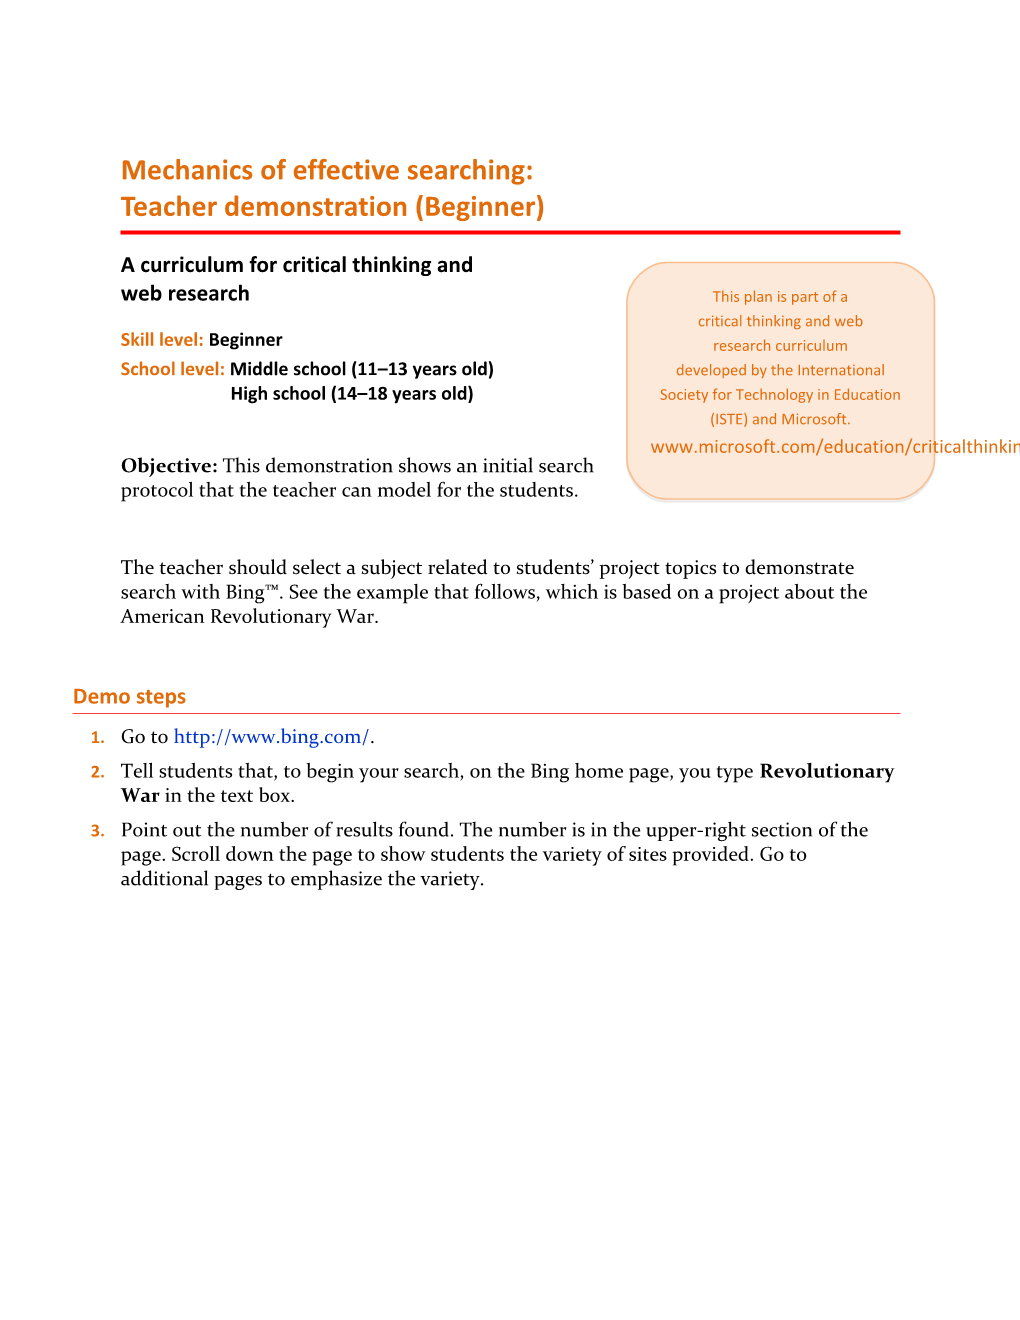 Mechanics of Effective Searching: Teacher Demonstration (Beginner)